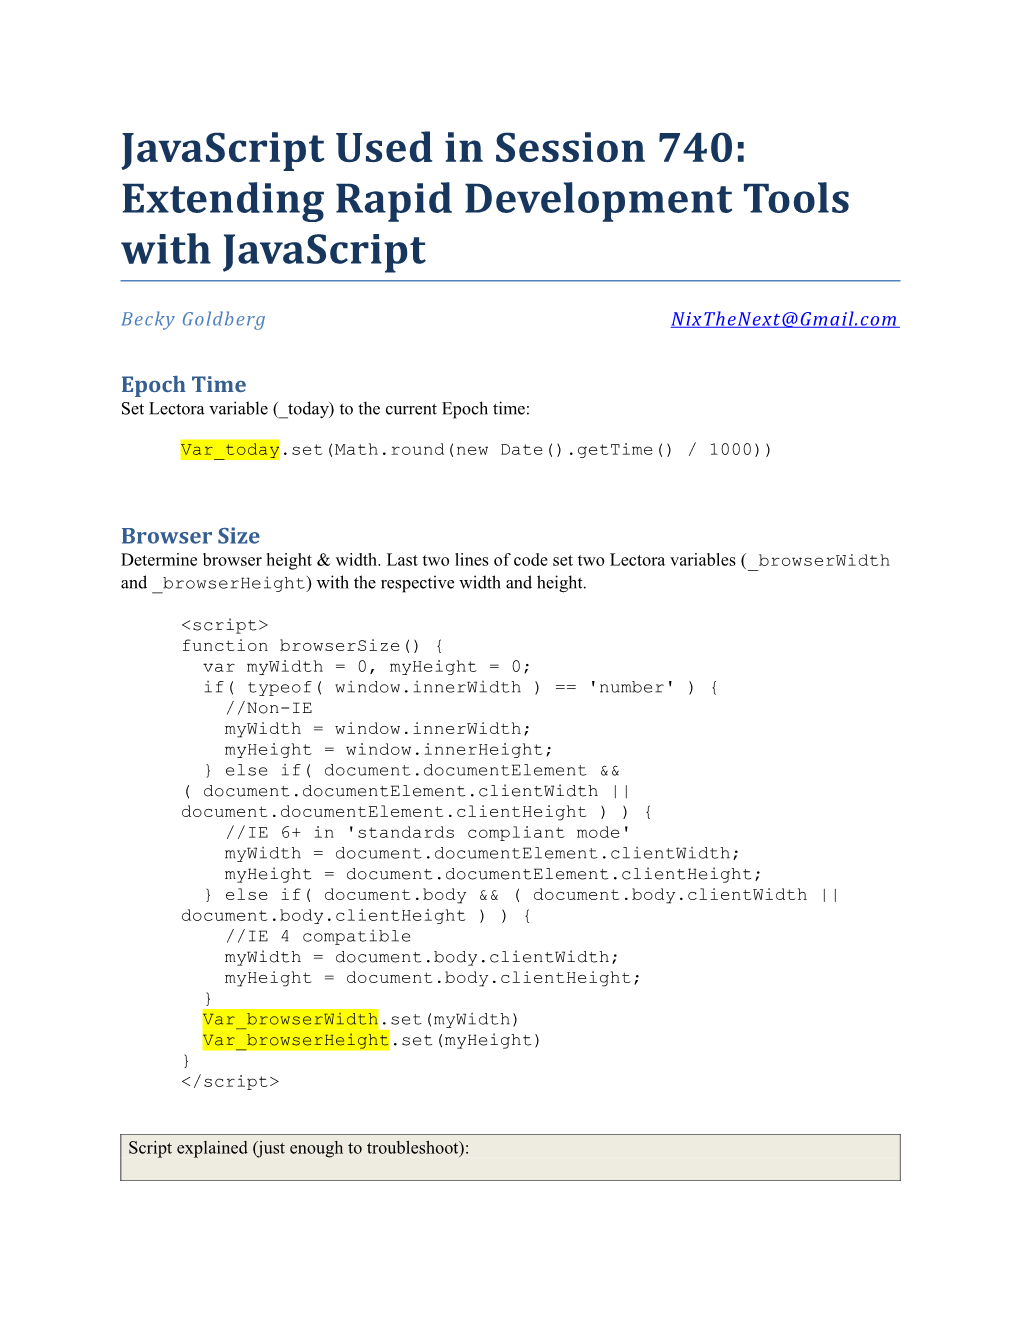 Javascript Used in Session 740: Extending Rapid Development Tools with Javascript